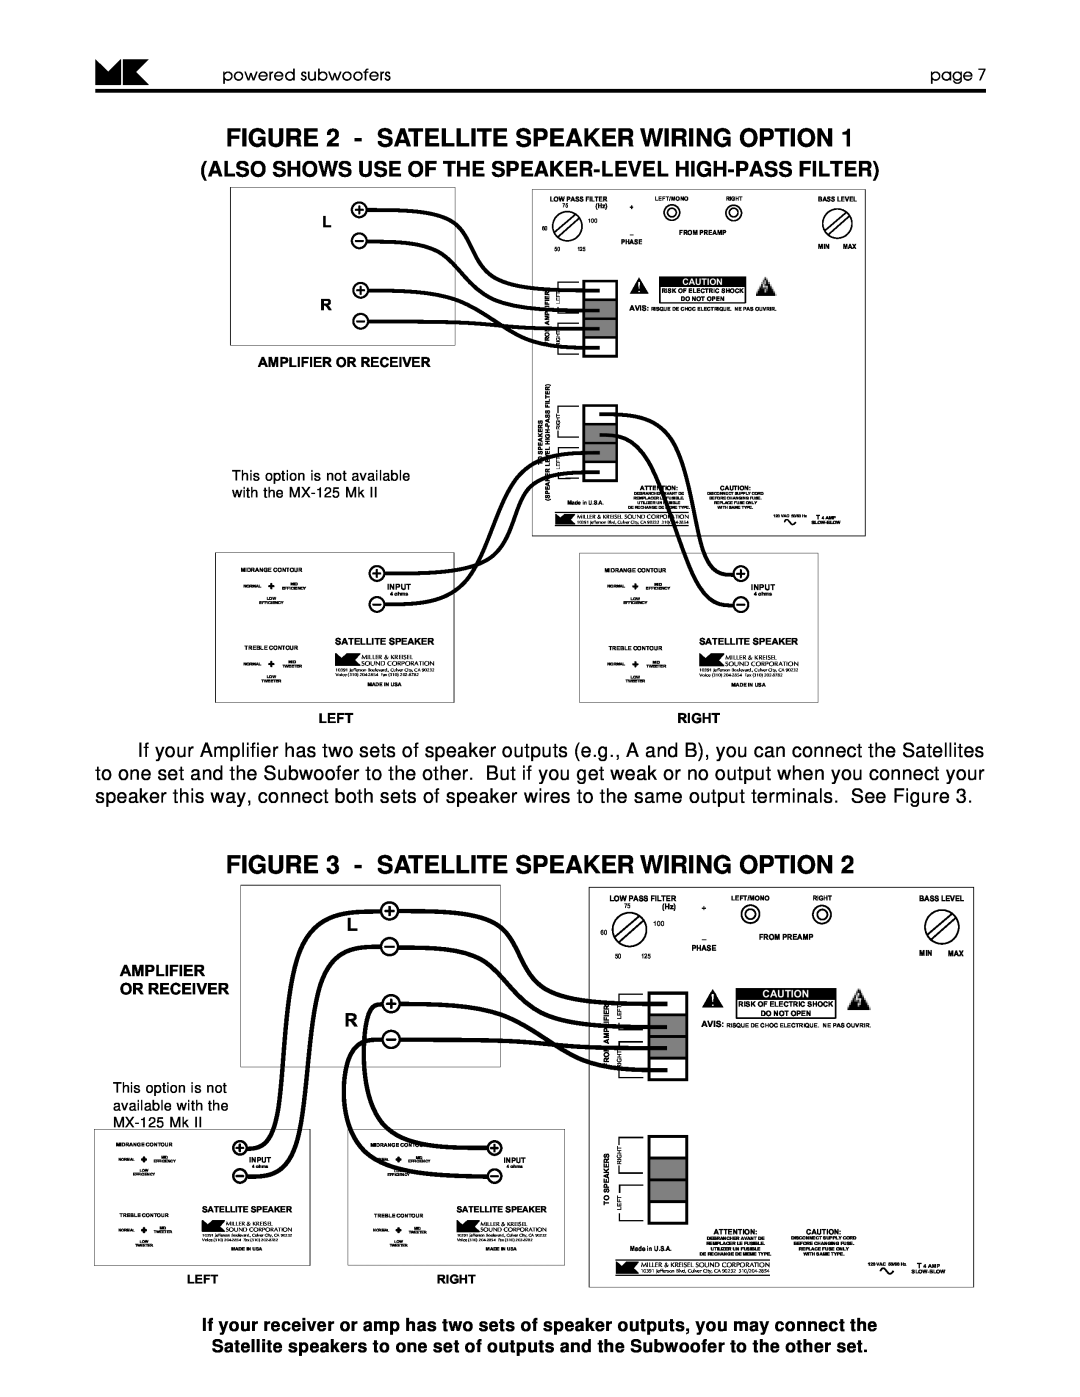 MK Sound VX-7 MK II, V-125 Satellite Speaker Wiring Option, powered subwoofers, page, Amplifier Or Receiver, Left, Right 